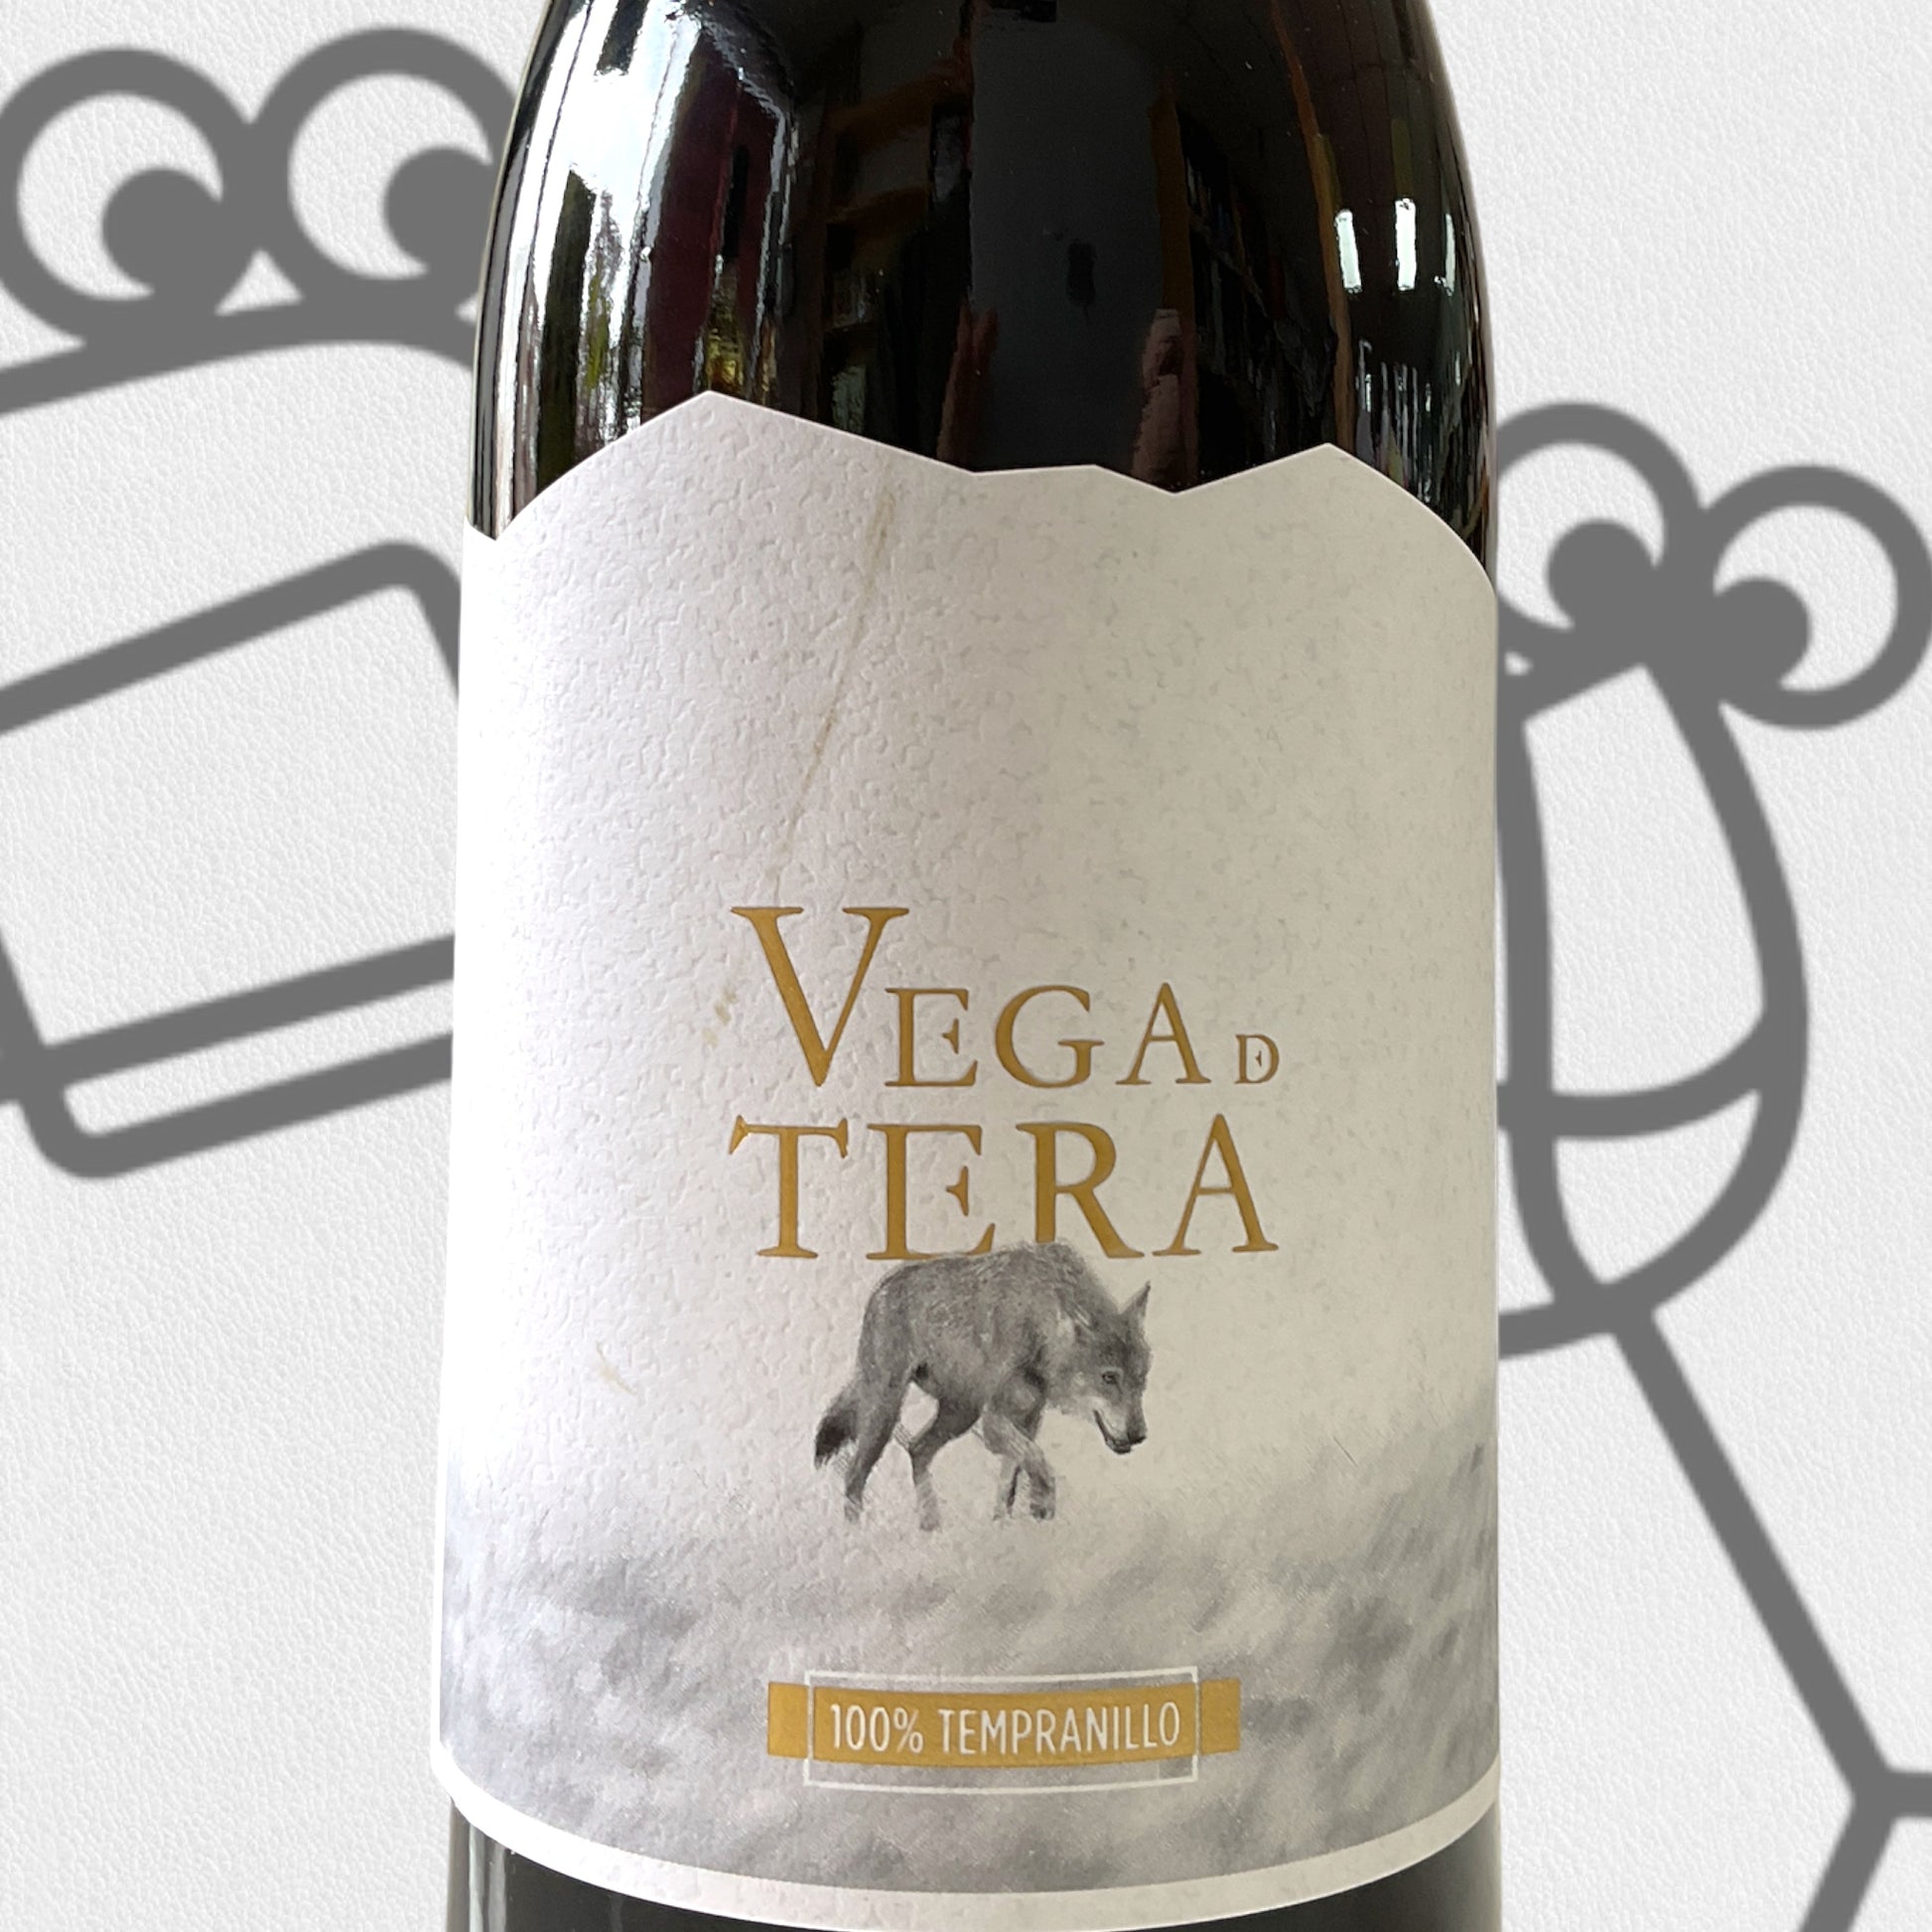 Vega de Tera Tempranillo Joven 2021 Castilla y Leon, Spain - Williston Park Wines & Spirits